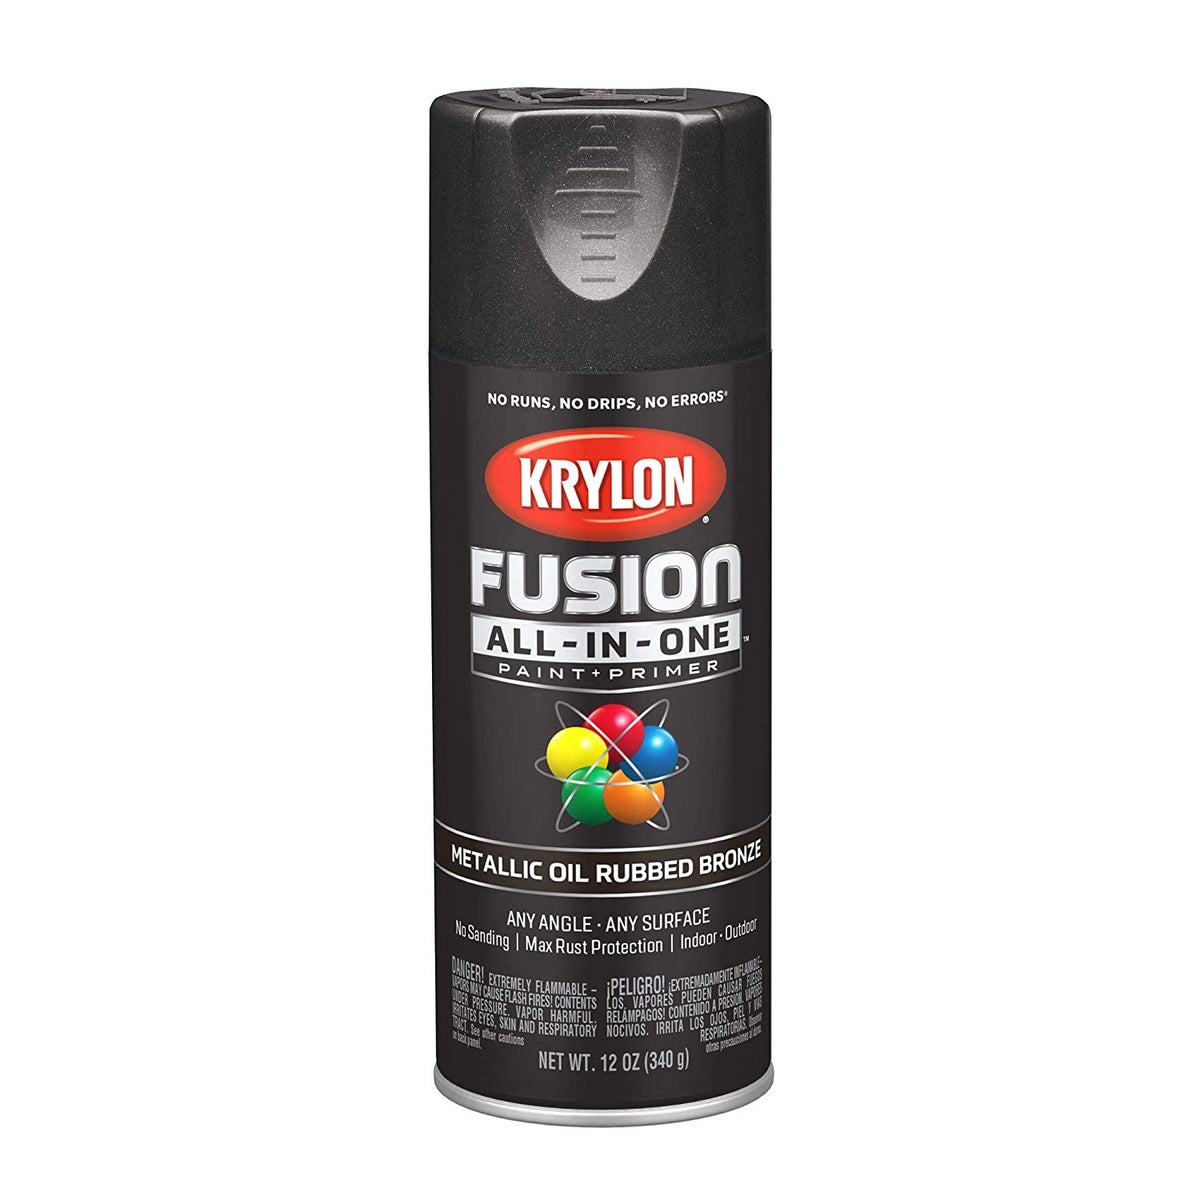 Krylon K02771007 Fusion All-In-One Spray Paint 12 Oz, Metallic Oil Rubbed Bronze